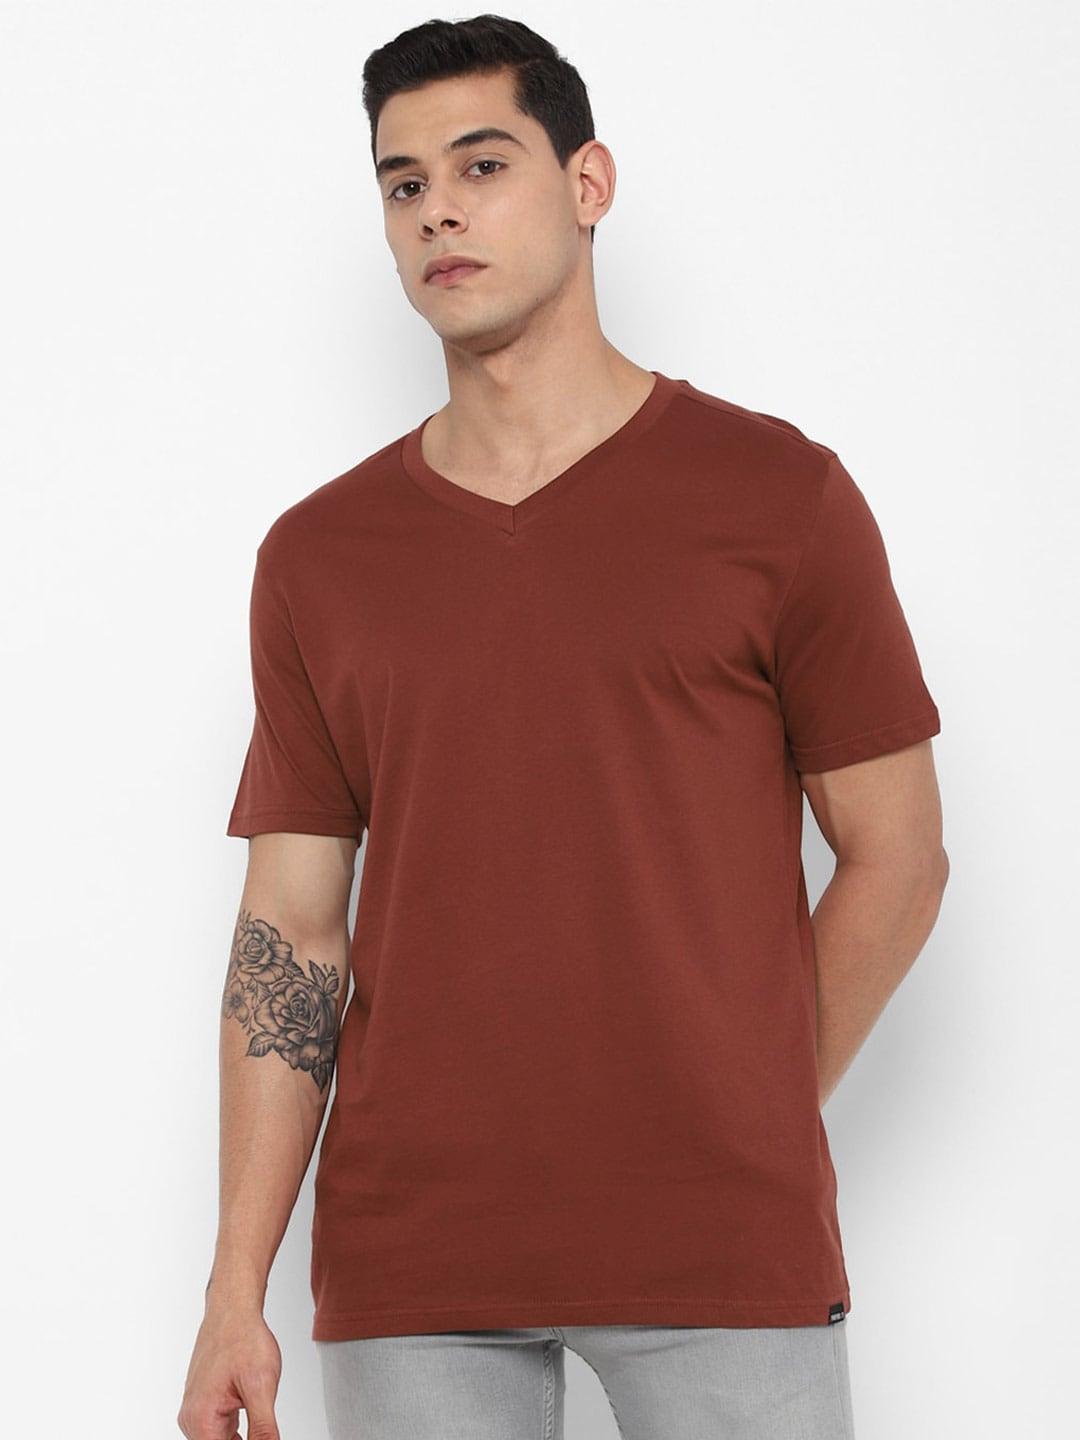 forever-21-men-brown-v-neck-t-shirt